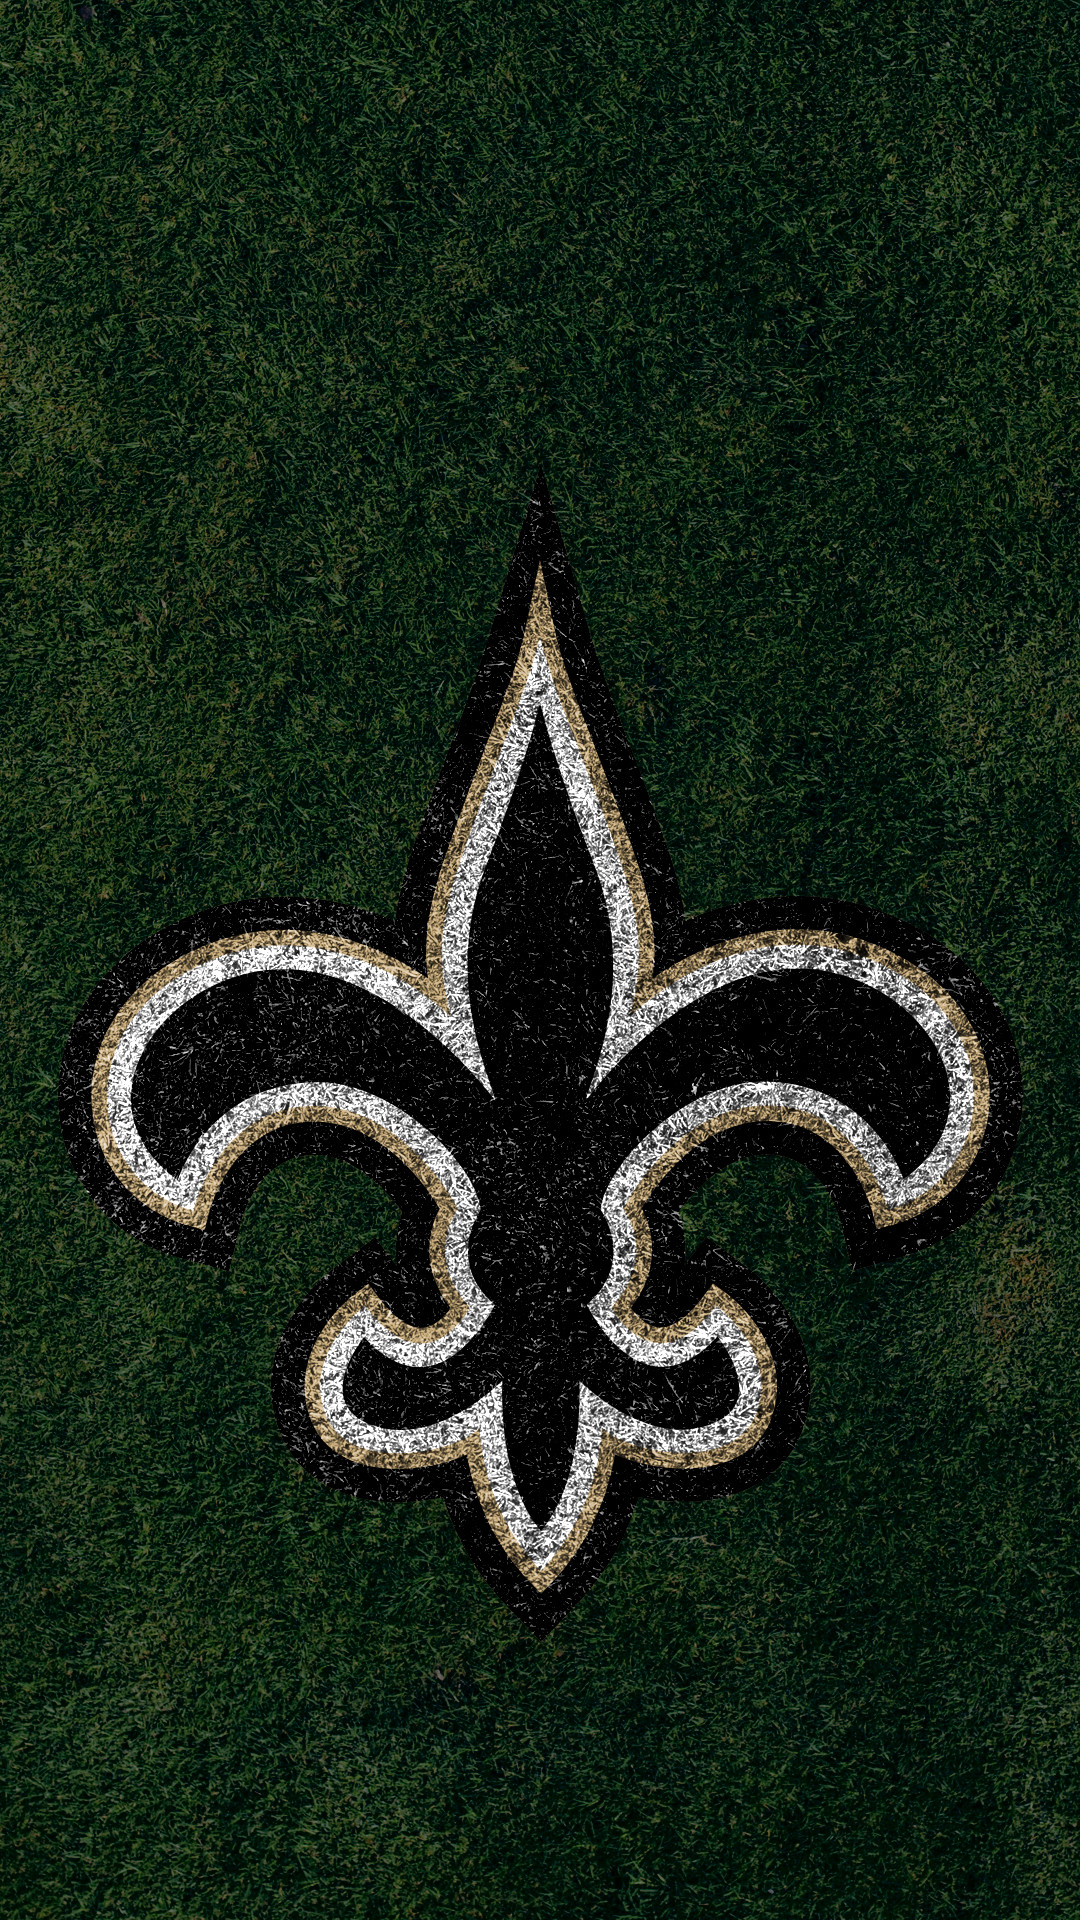 1080x1920 ... New Orleans Saints 2017 turf logo wallpaper free iphone 5, 6, 7, galaxy